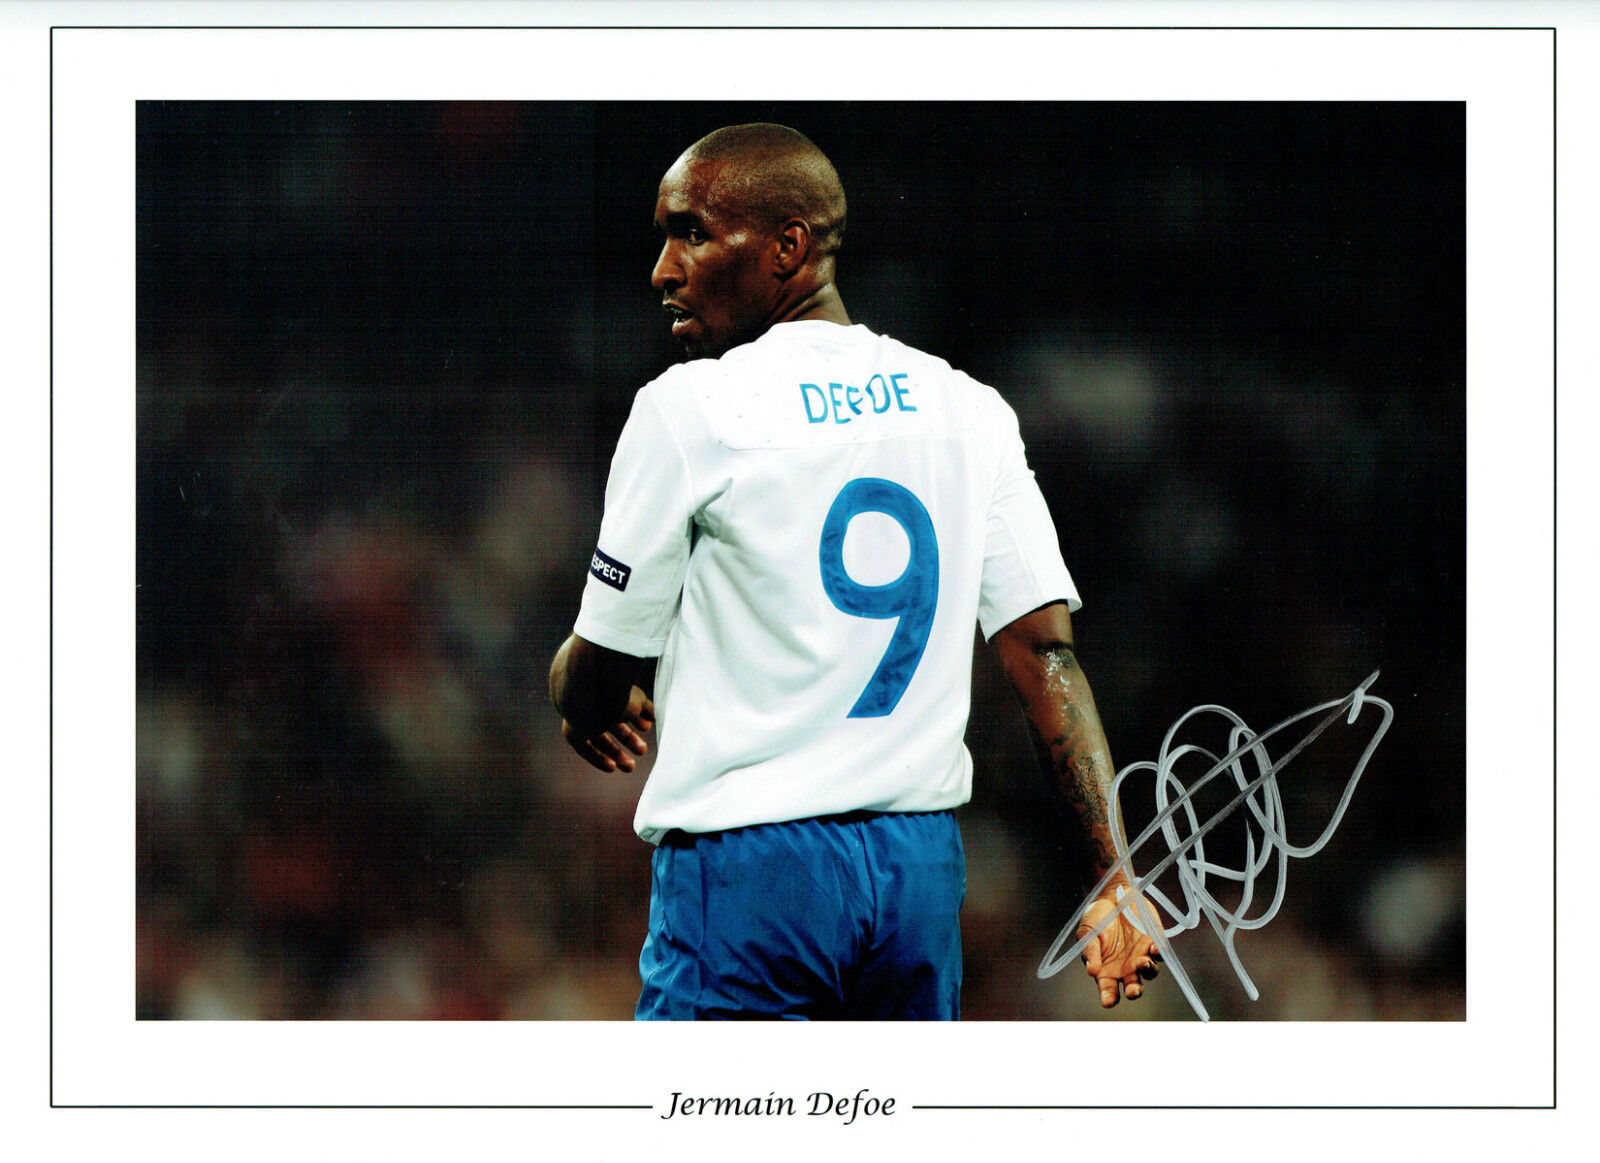 Jermaine DEFOE SIGNED Autograph 16x12 Photo Poster painting AFTAL COA England Football